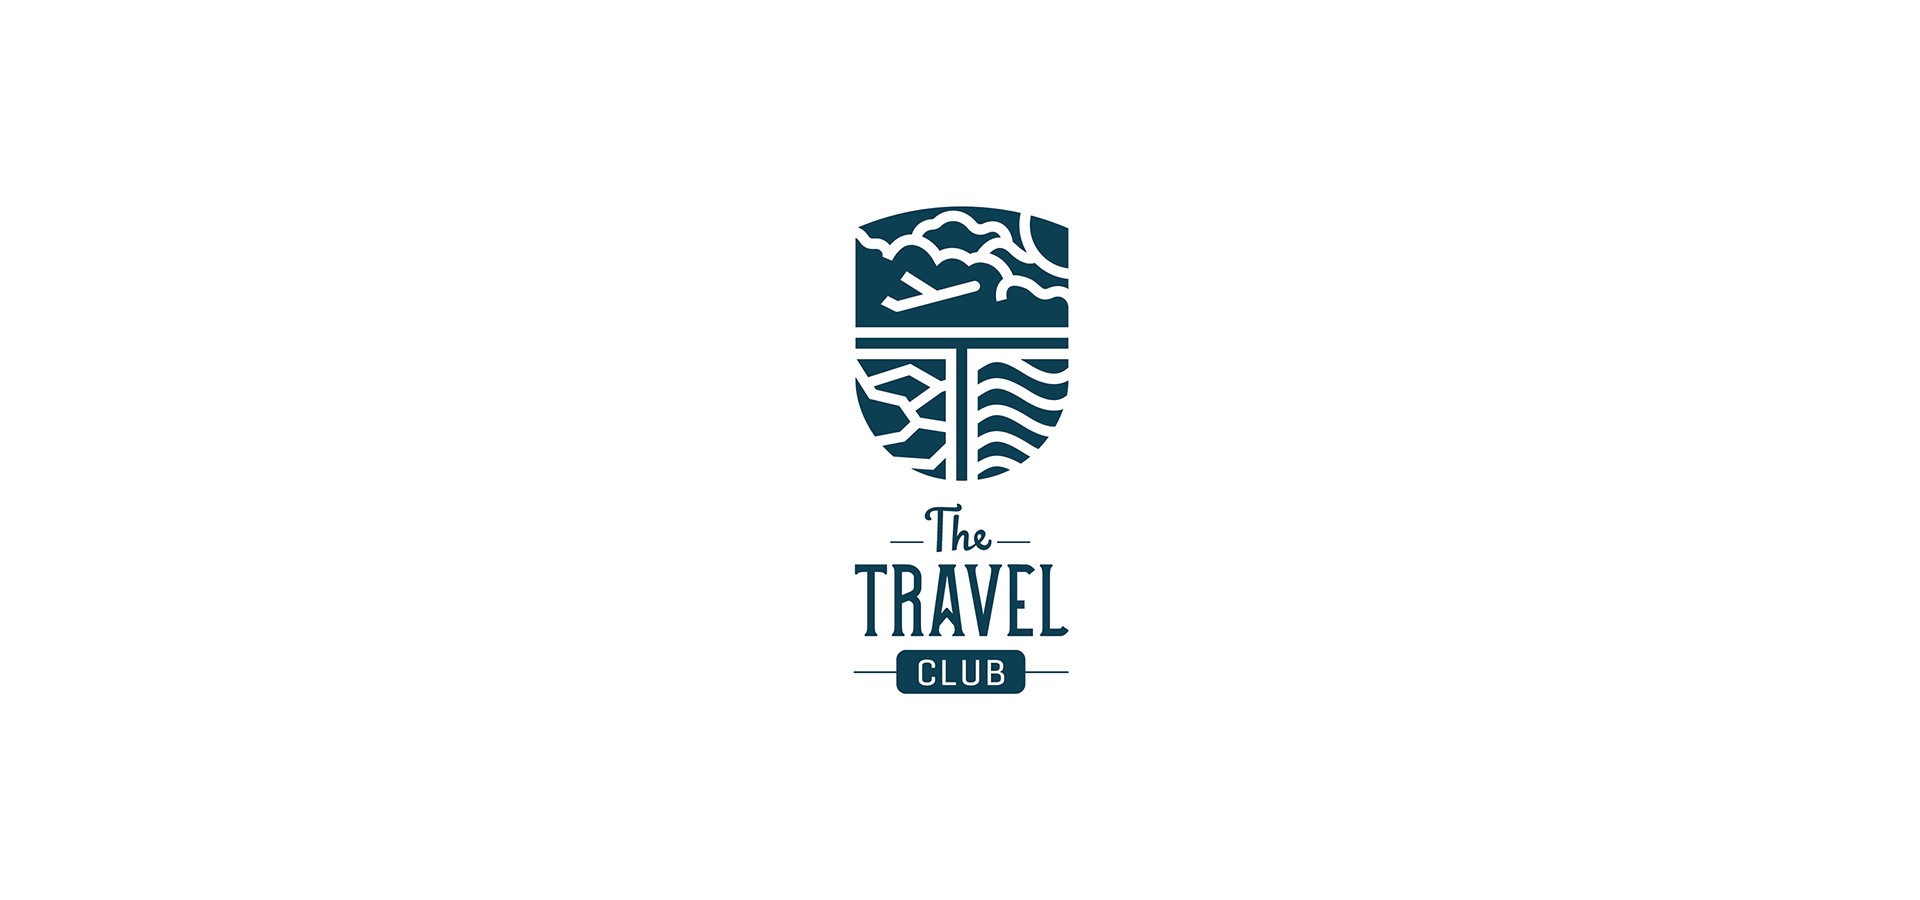 THE TRAVEL CLUB